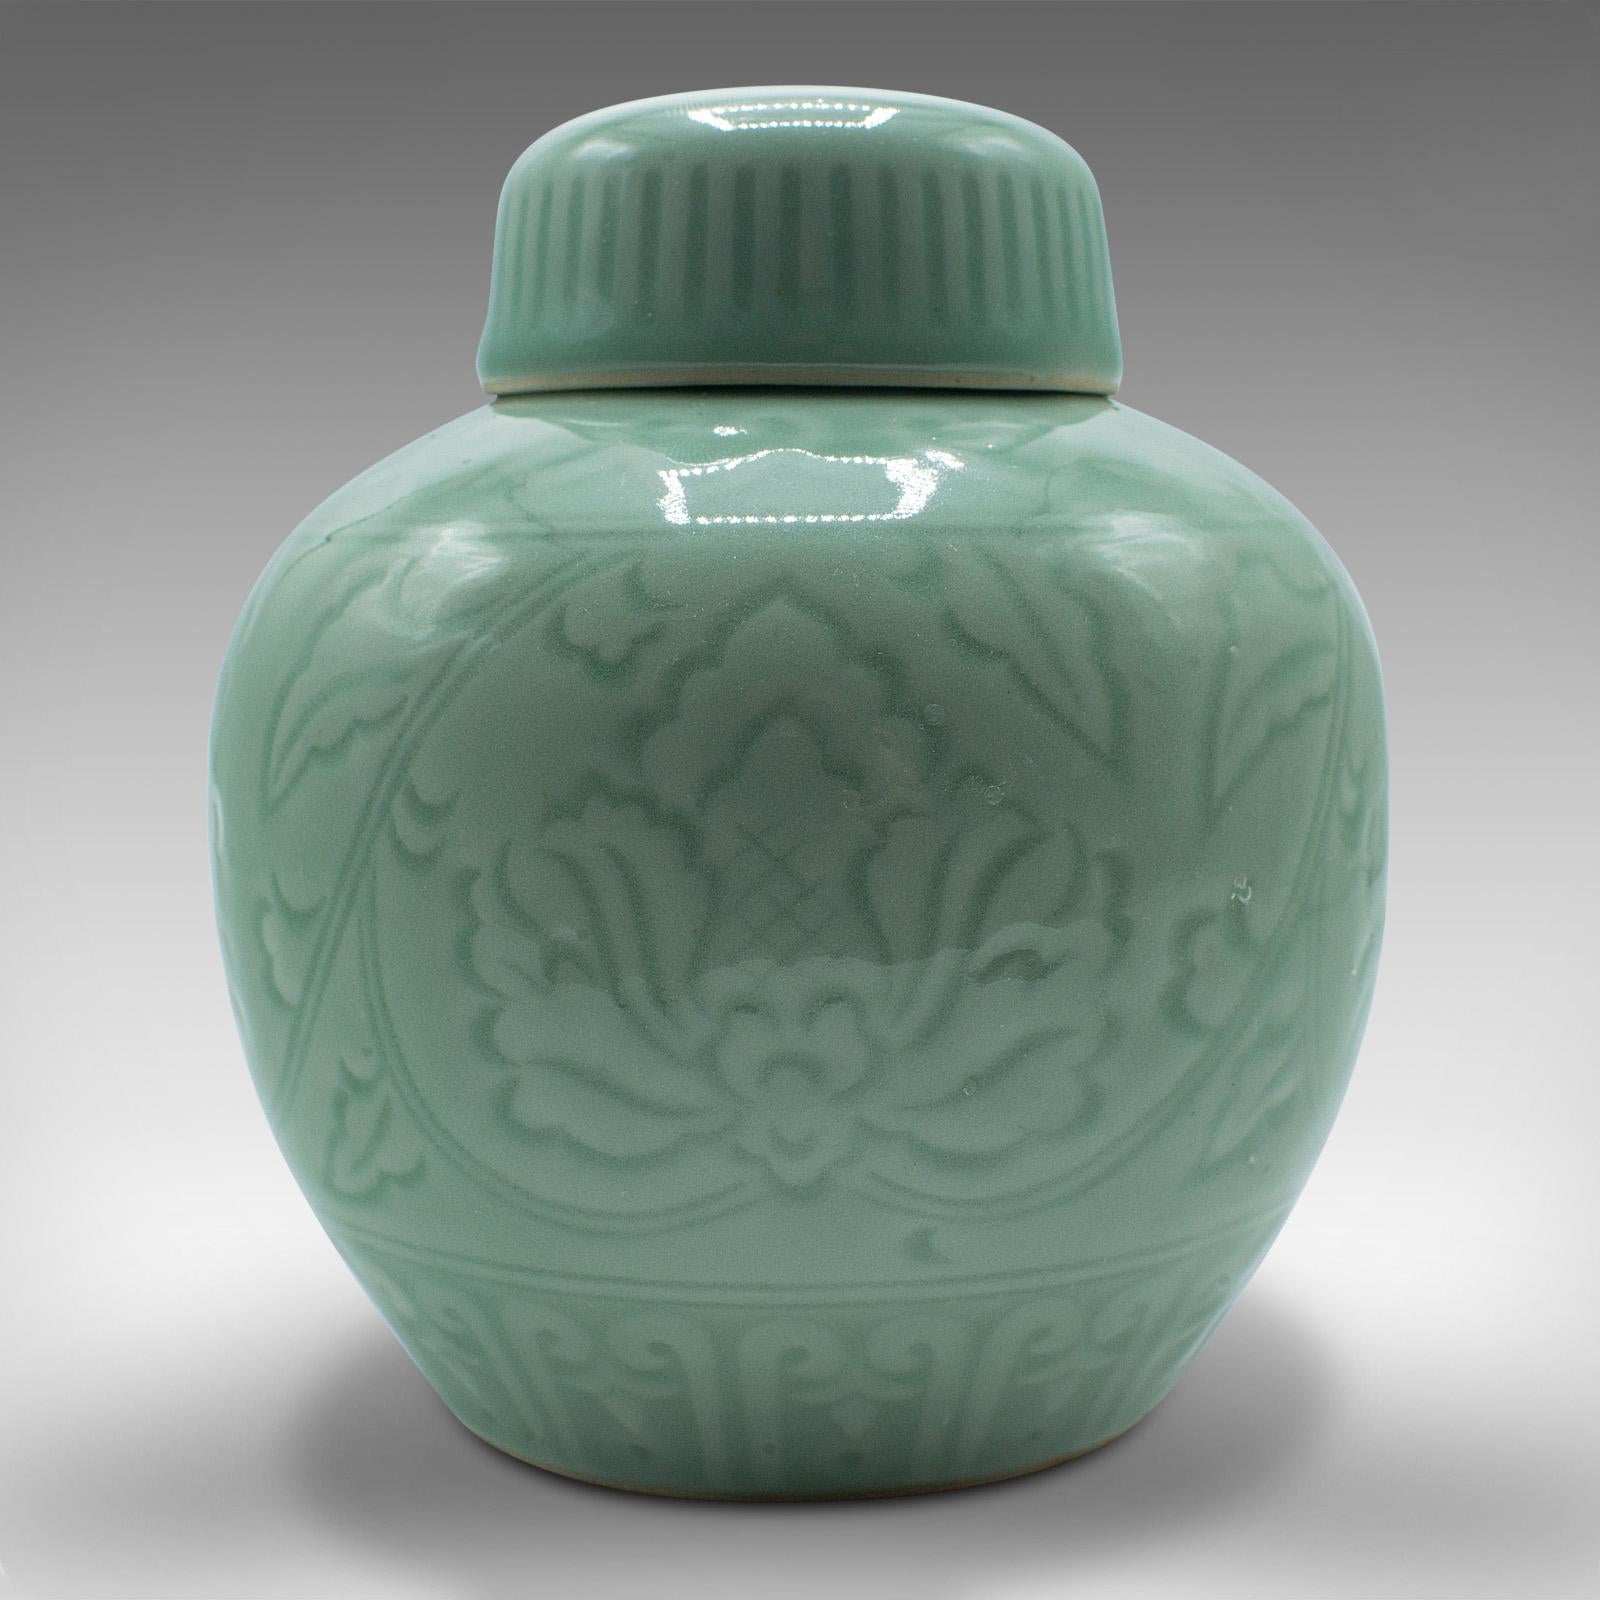 Pair Of Antique Decorative Spice Jars, Chinese, Celadon, Ceramic Pot, Victorian For Sale 4